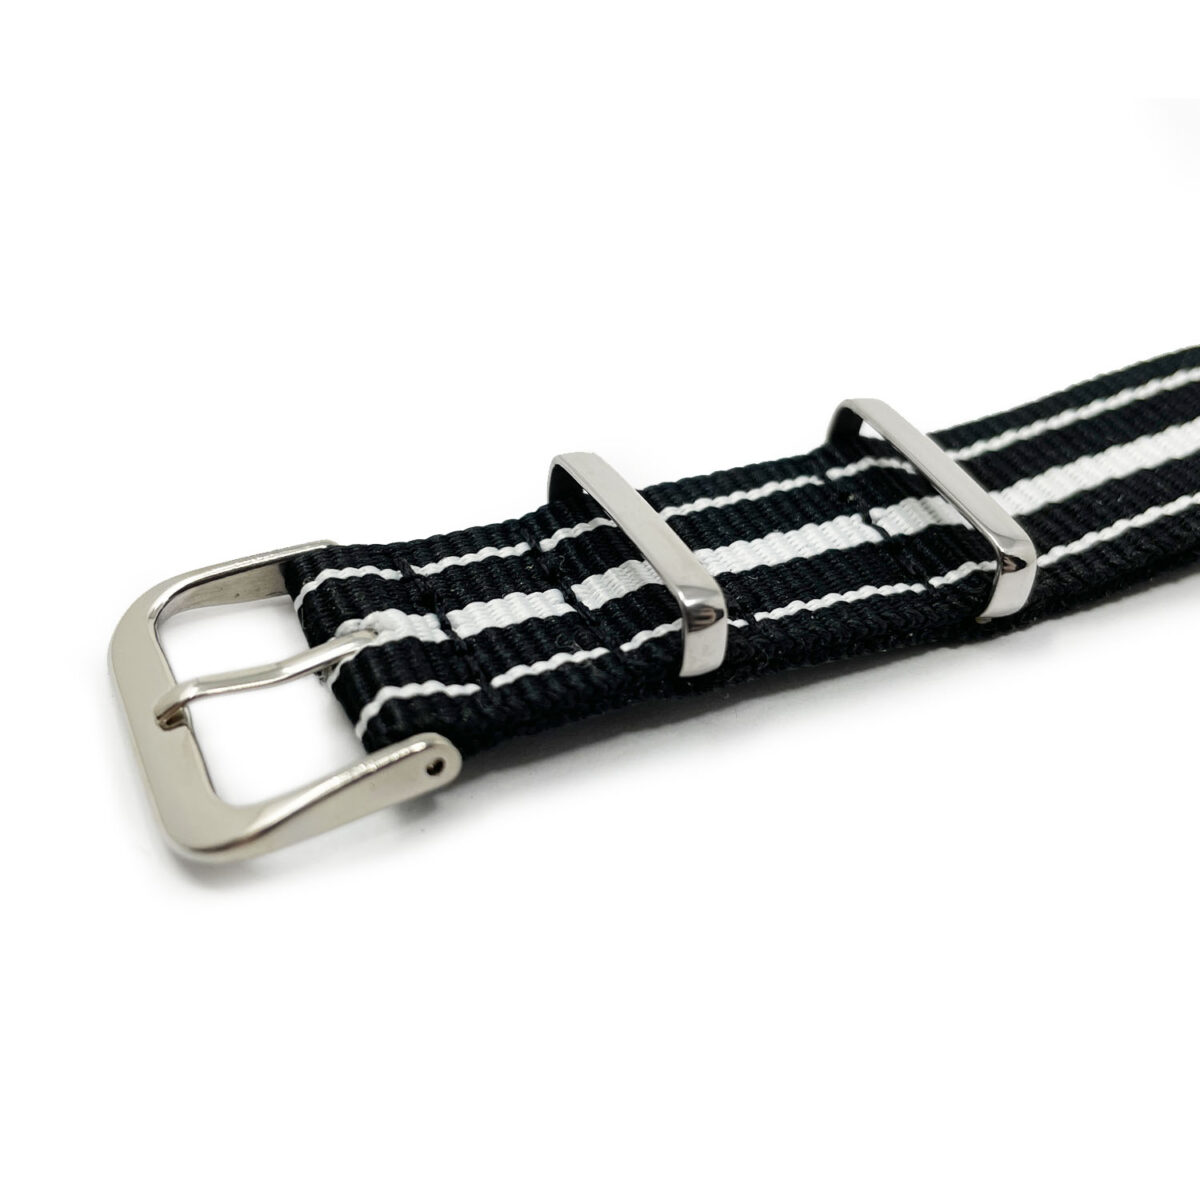 S37038 black and white strap 2